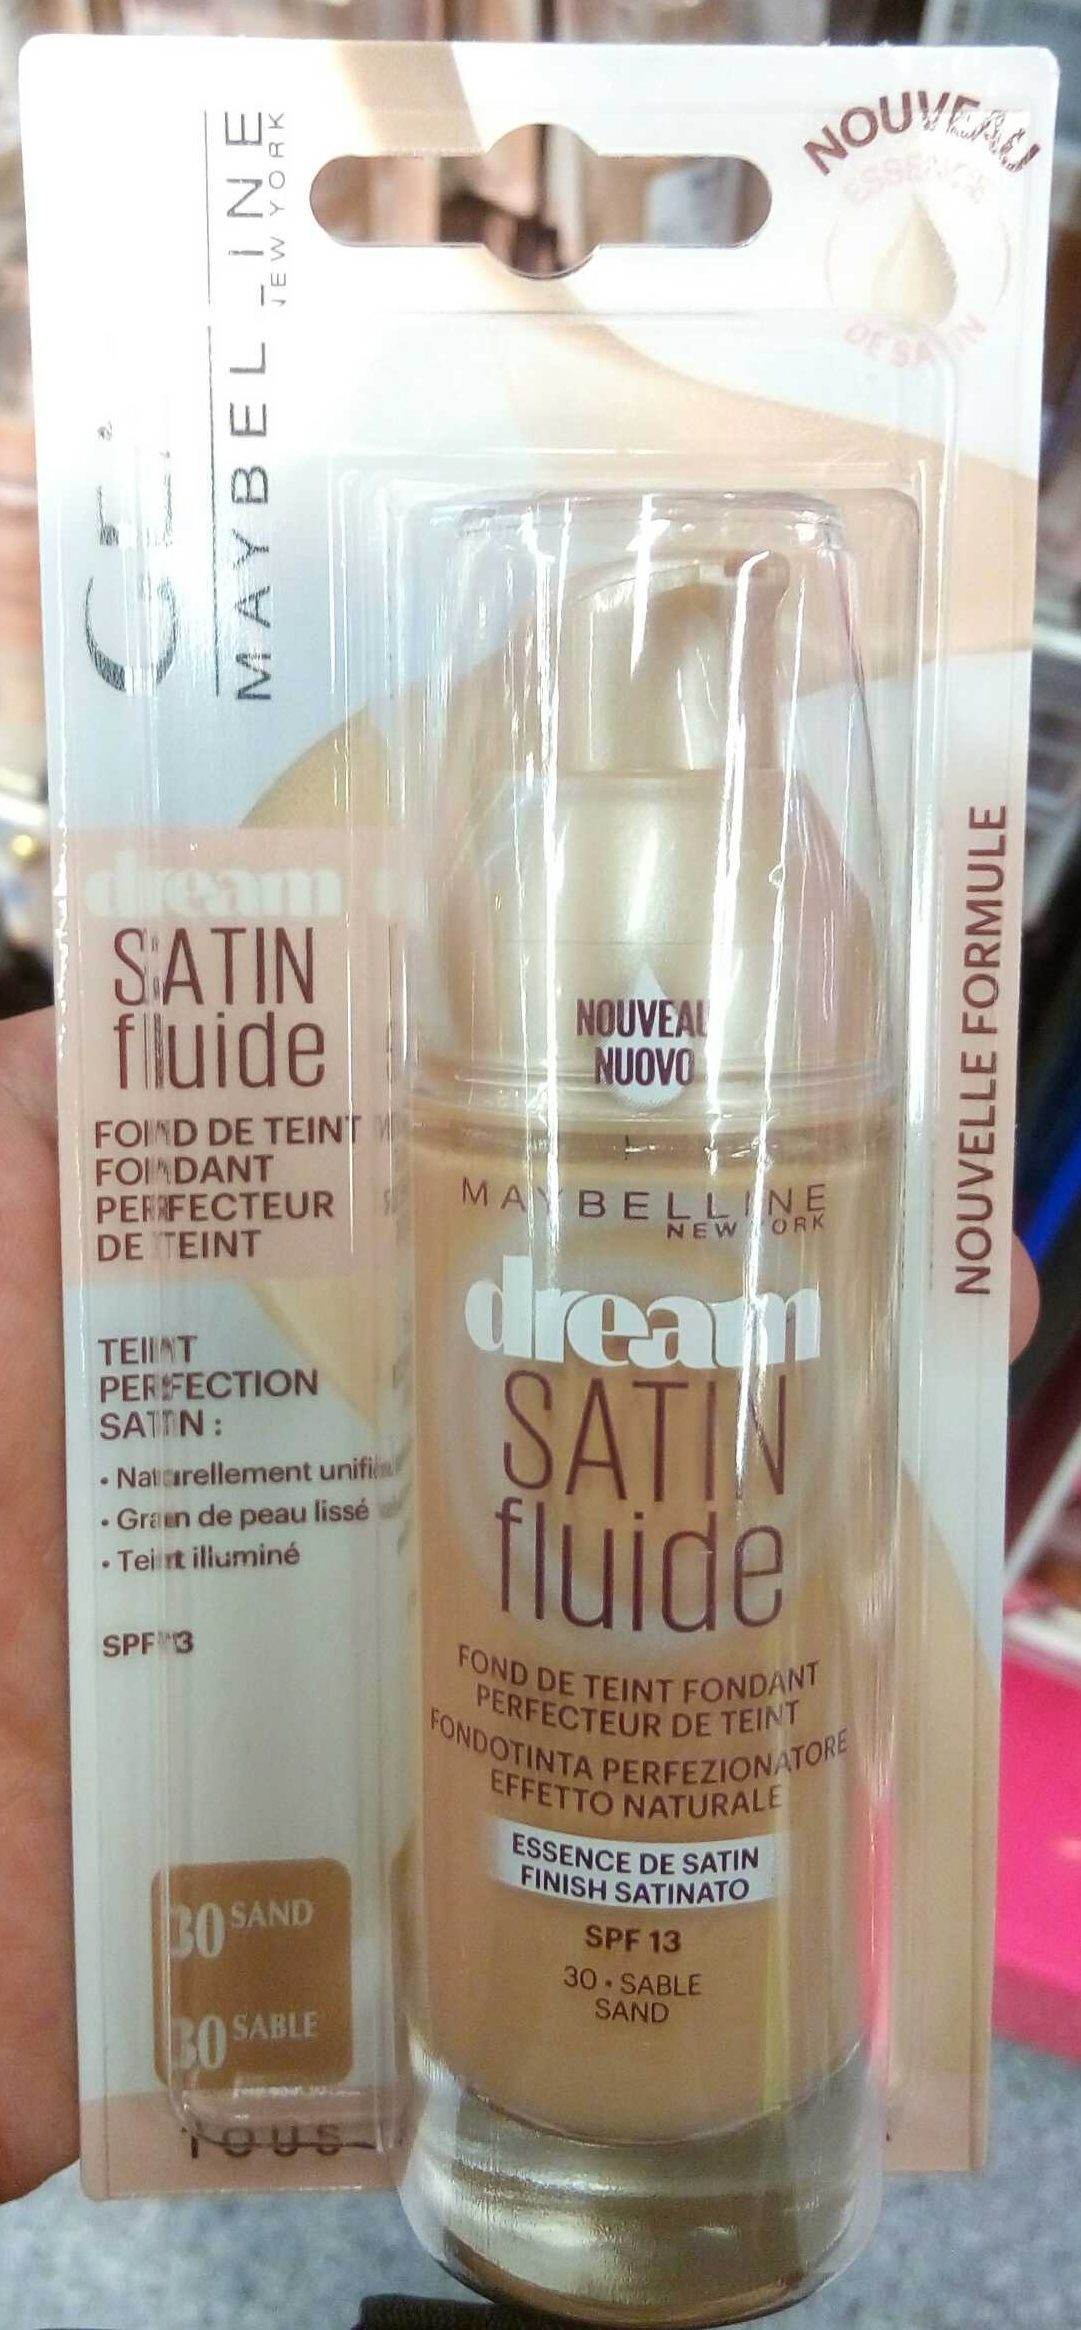 Dream Satin Fluide Sable - Product - fr